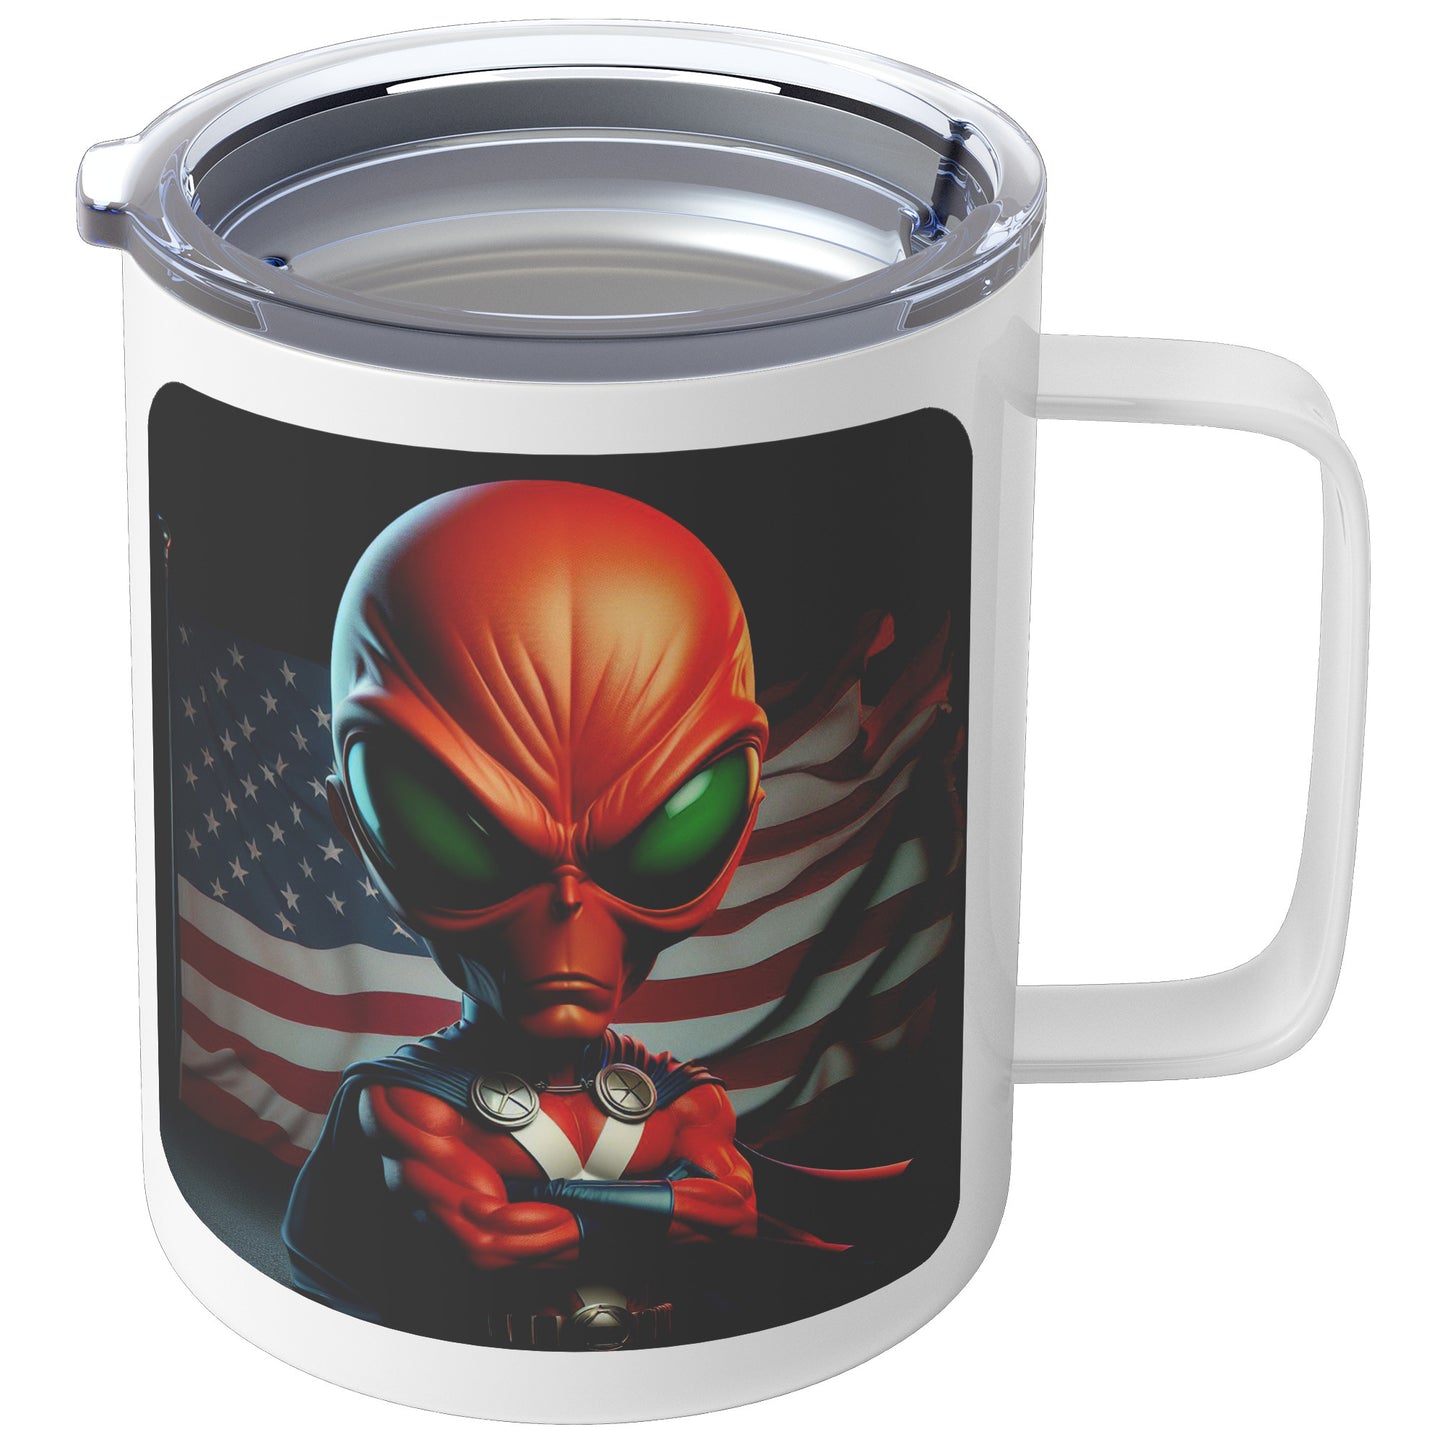 Martian Alien Caricature - Coffee Mug #6